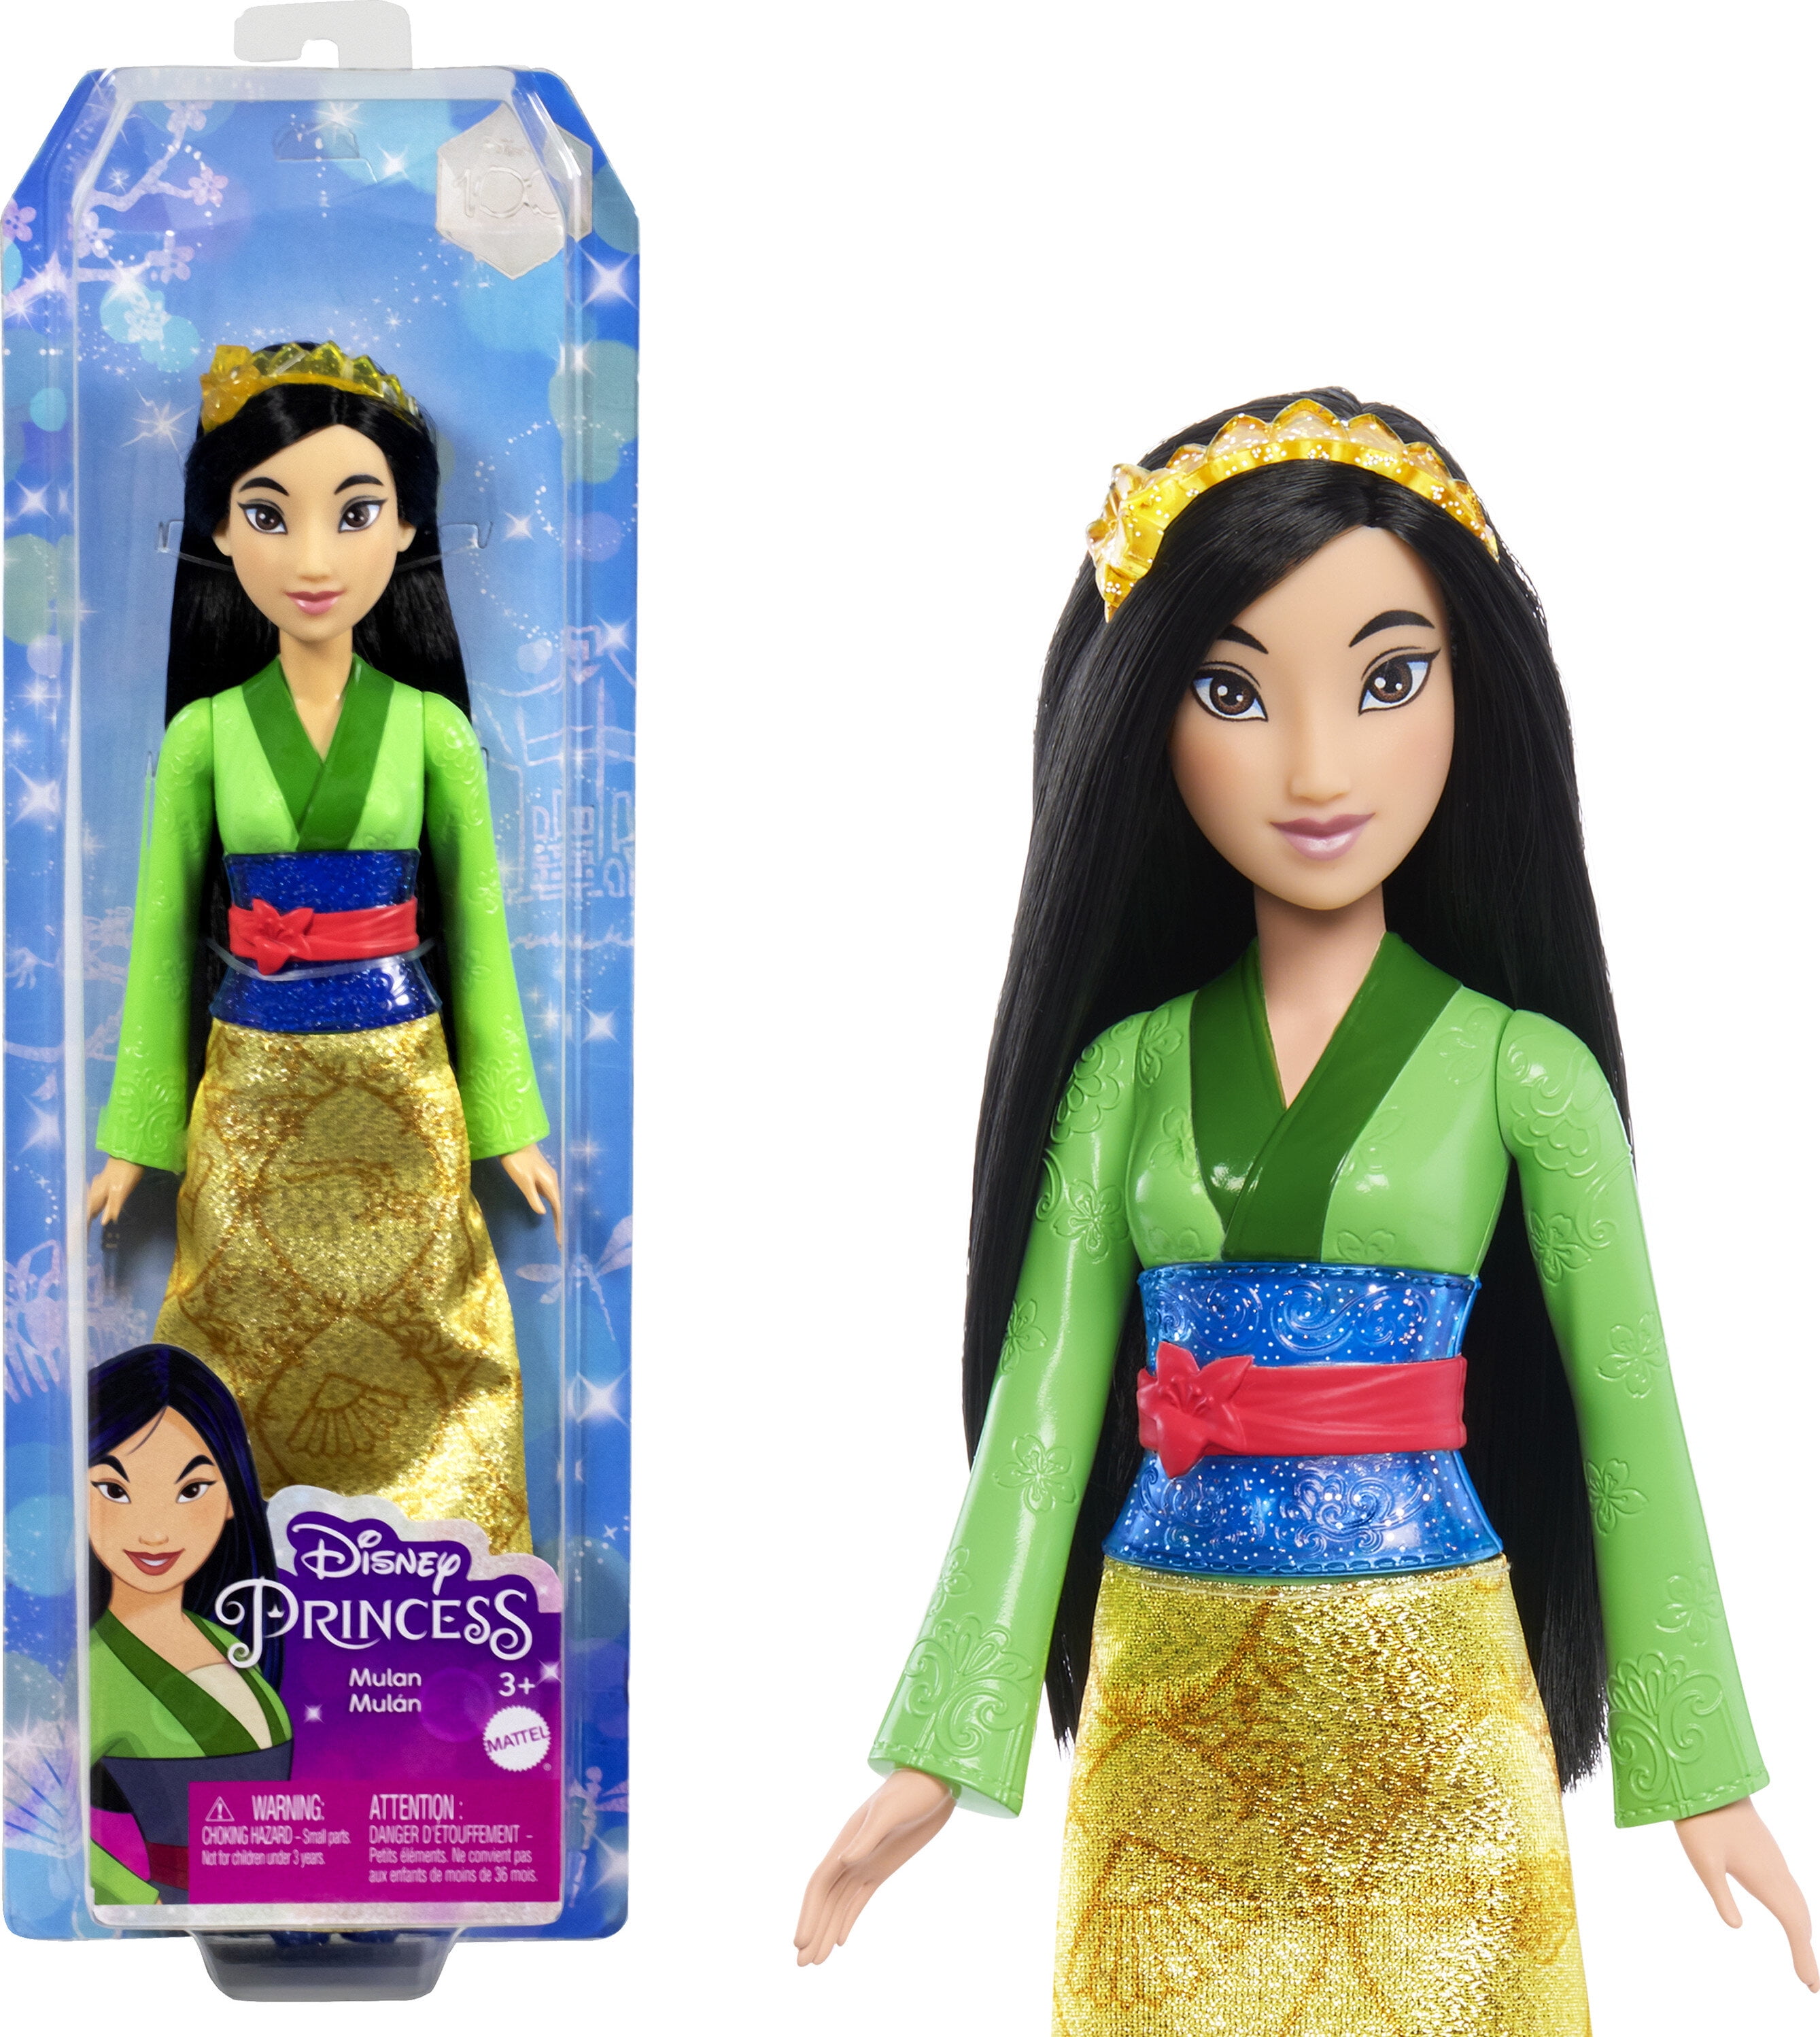 Disney Princess Mulan Fashion Doll with Black Hair, Brown Eyes & Hair Accessory, Sparkling Look